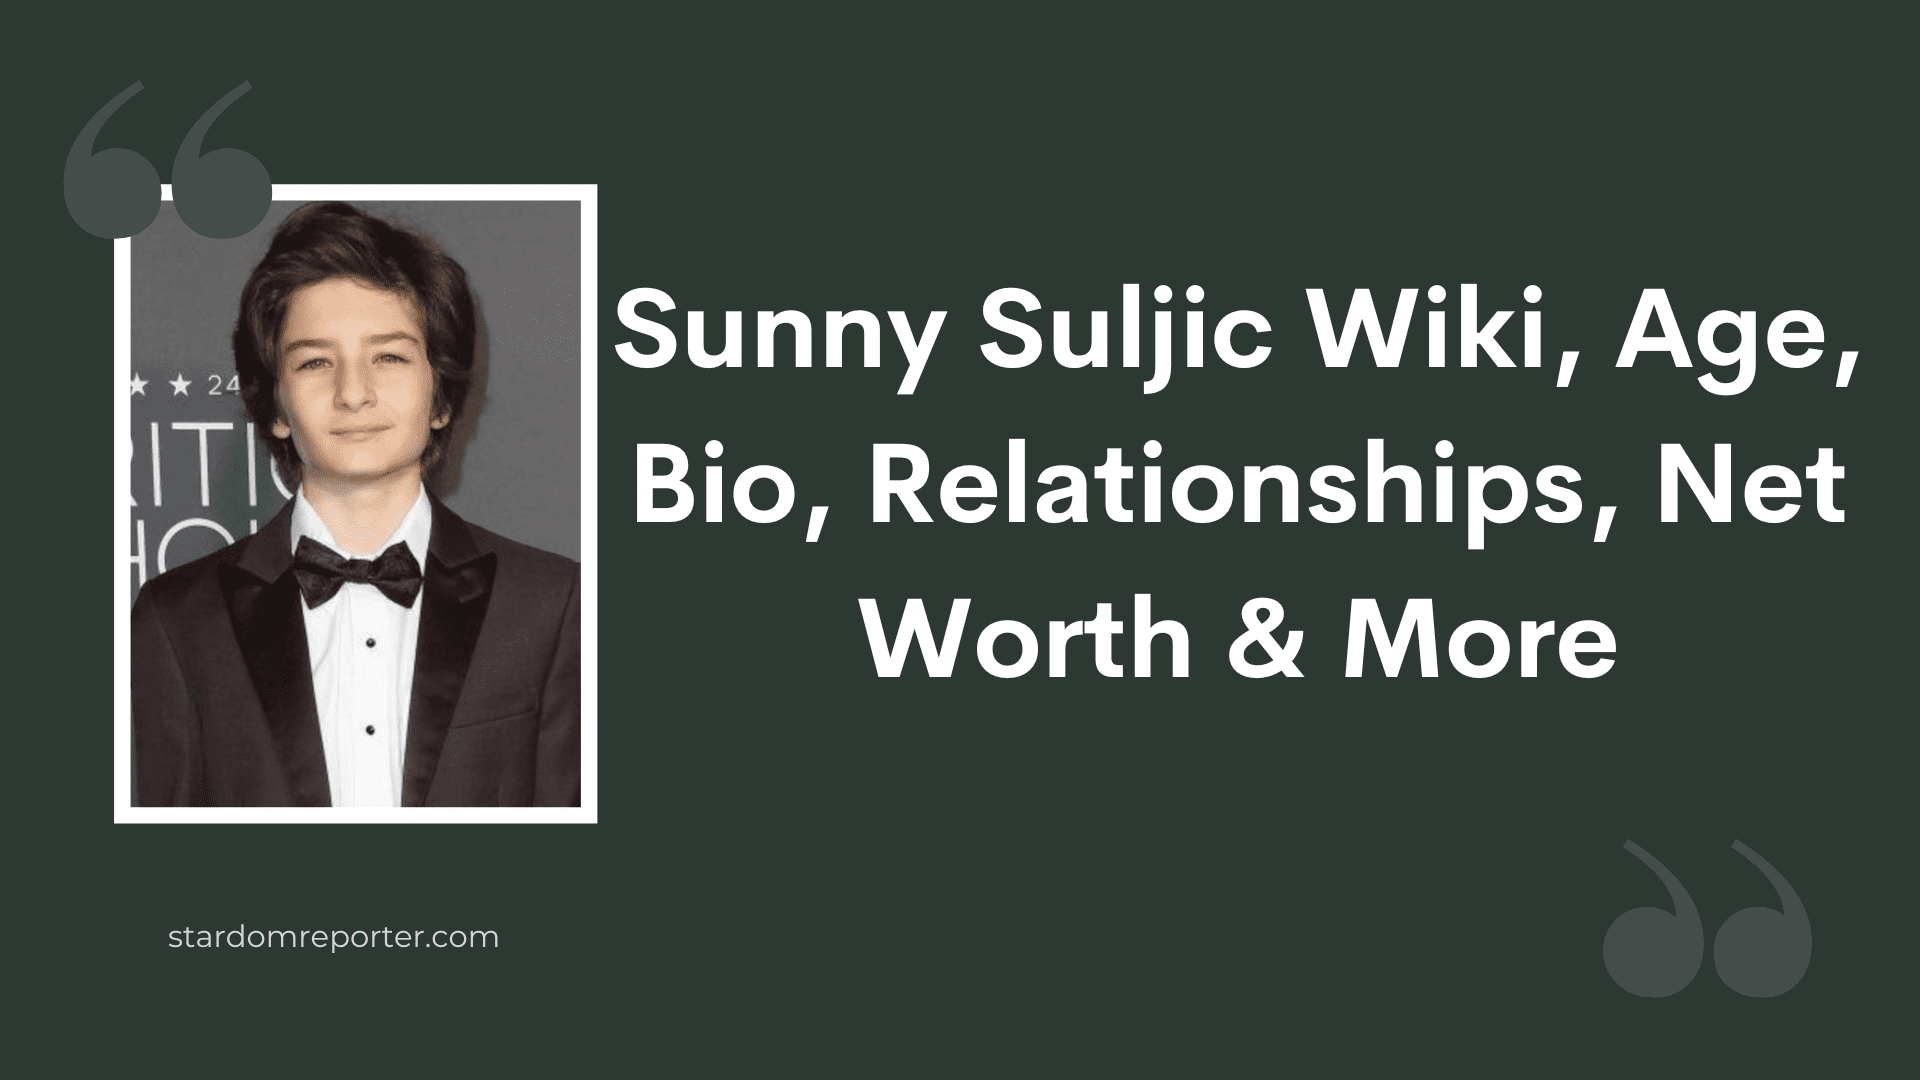 Sunny Suljic Wiki, Age, Bio, Relationships, Net Worth & More - 36